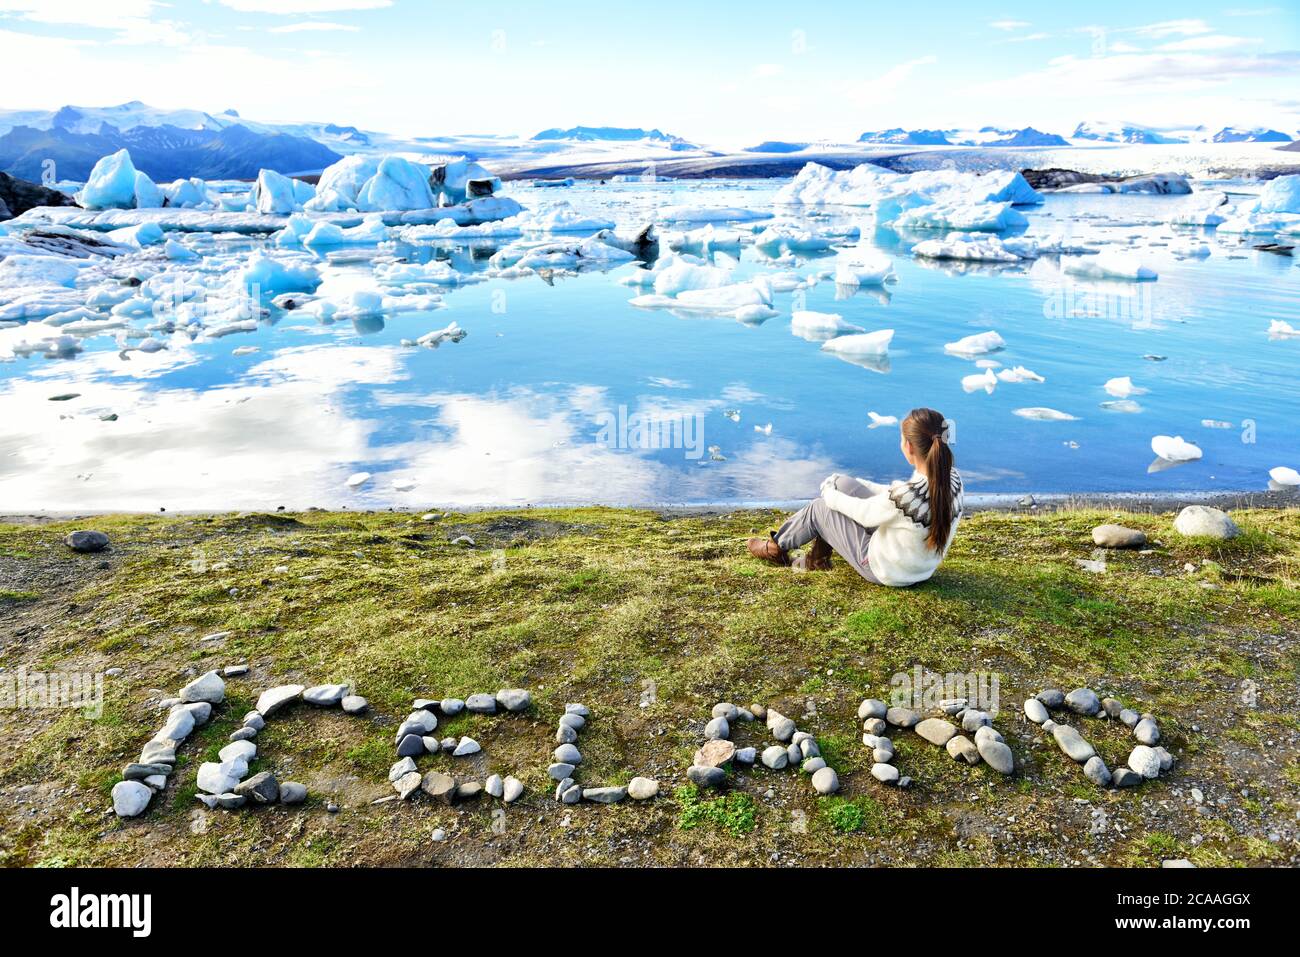 Iceland nature landscape Jokulsarlon glacial lagoon - ICELAND text written with rocks. Woman enjoying view visiting tourist destination landmark Stock Photo